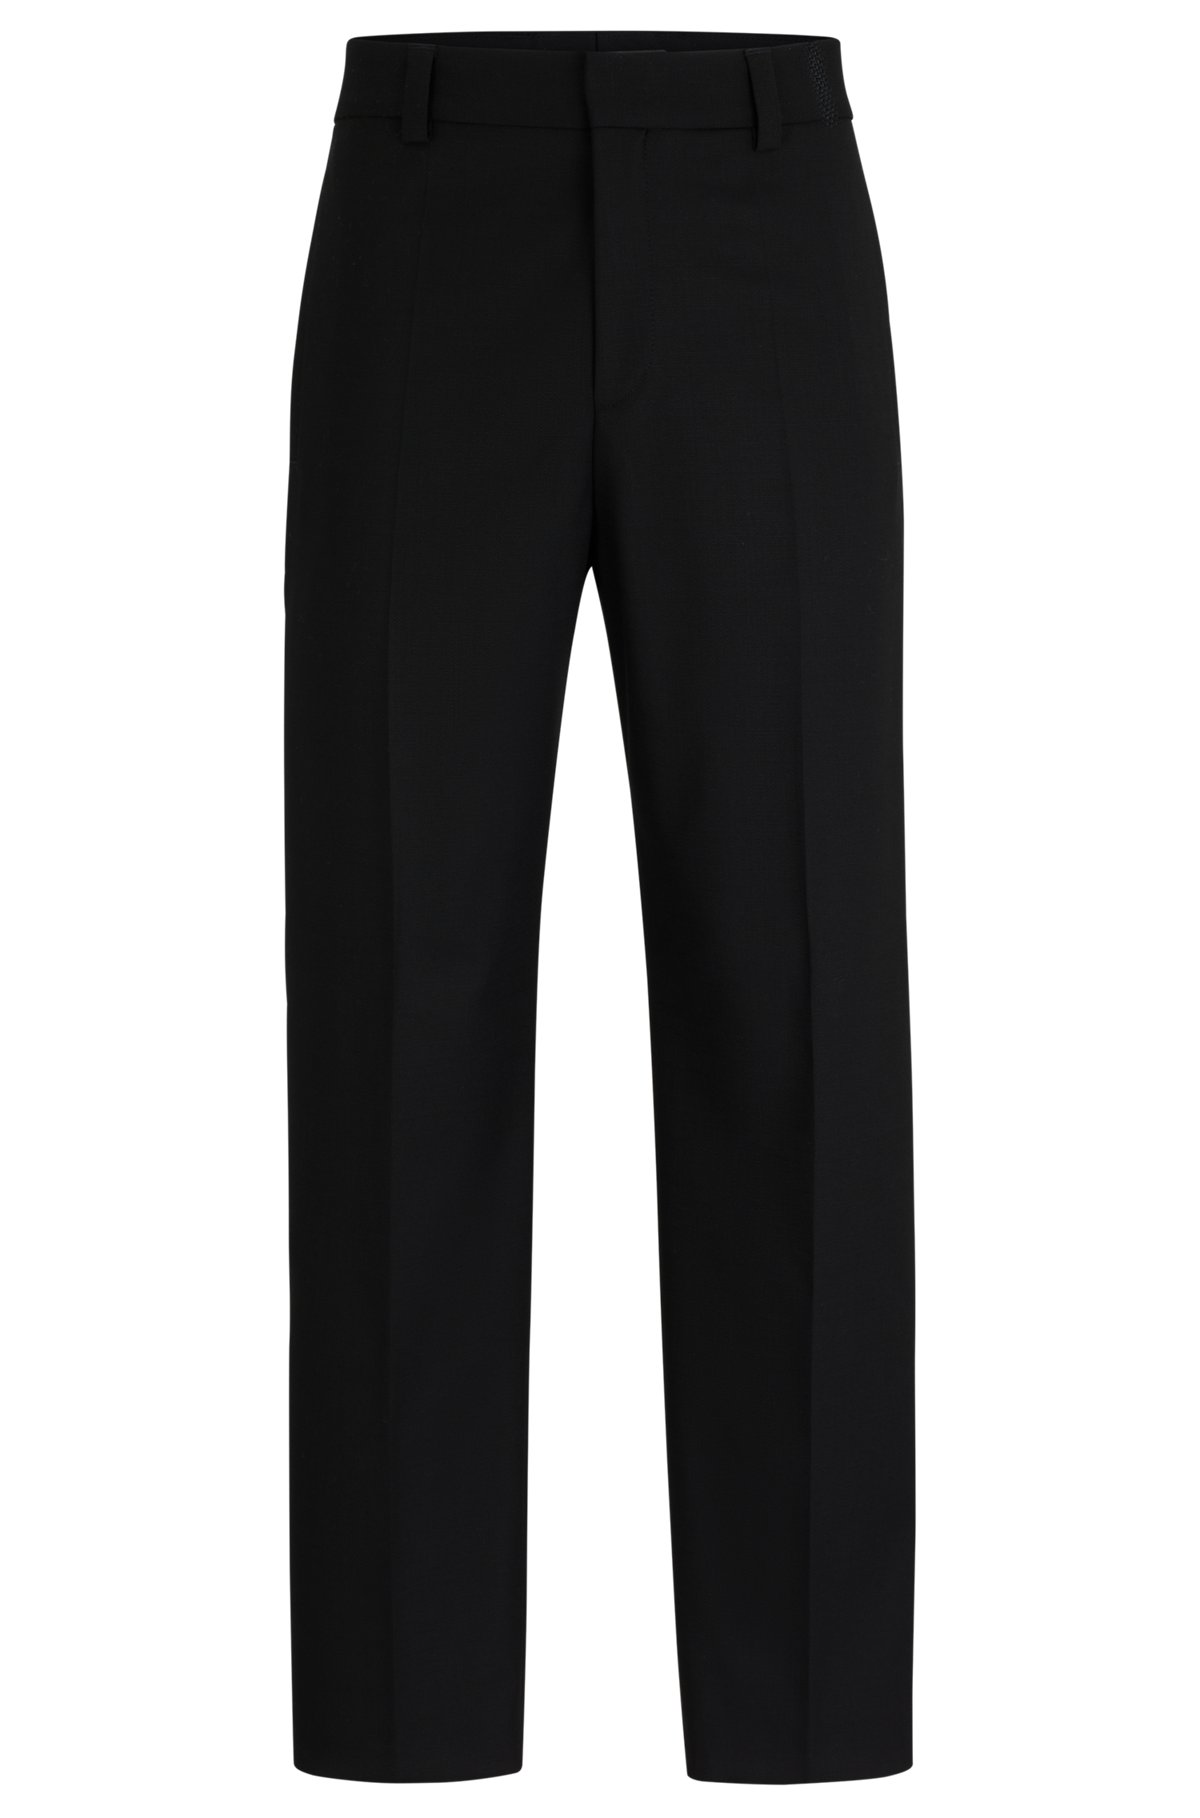 HUGO - HUGO x LJUBAV formal trousers in patterned stretch cloth